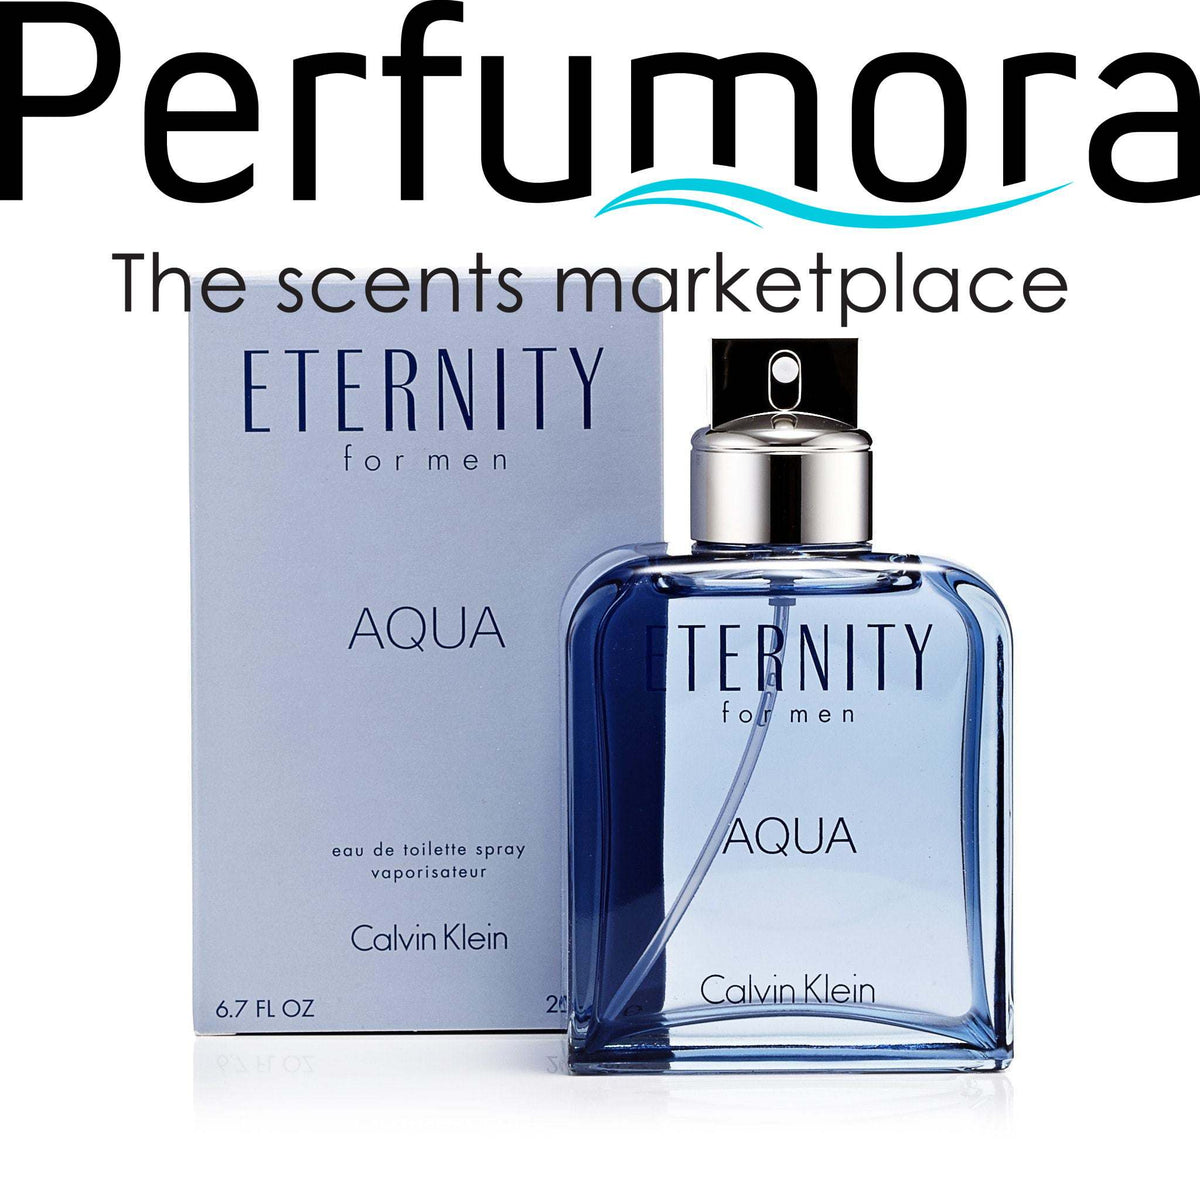 Calvin Klein Eternity Aqua EDT Spray for Men - Perfumora